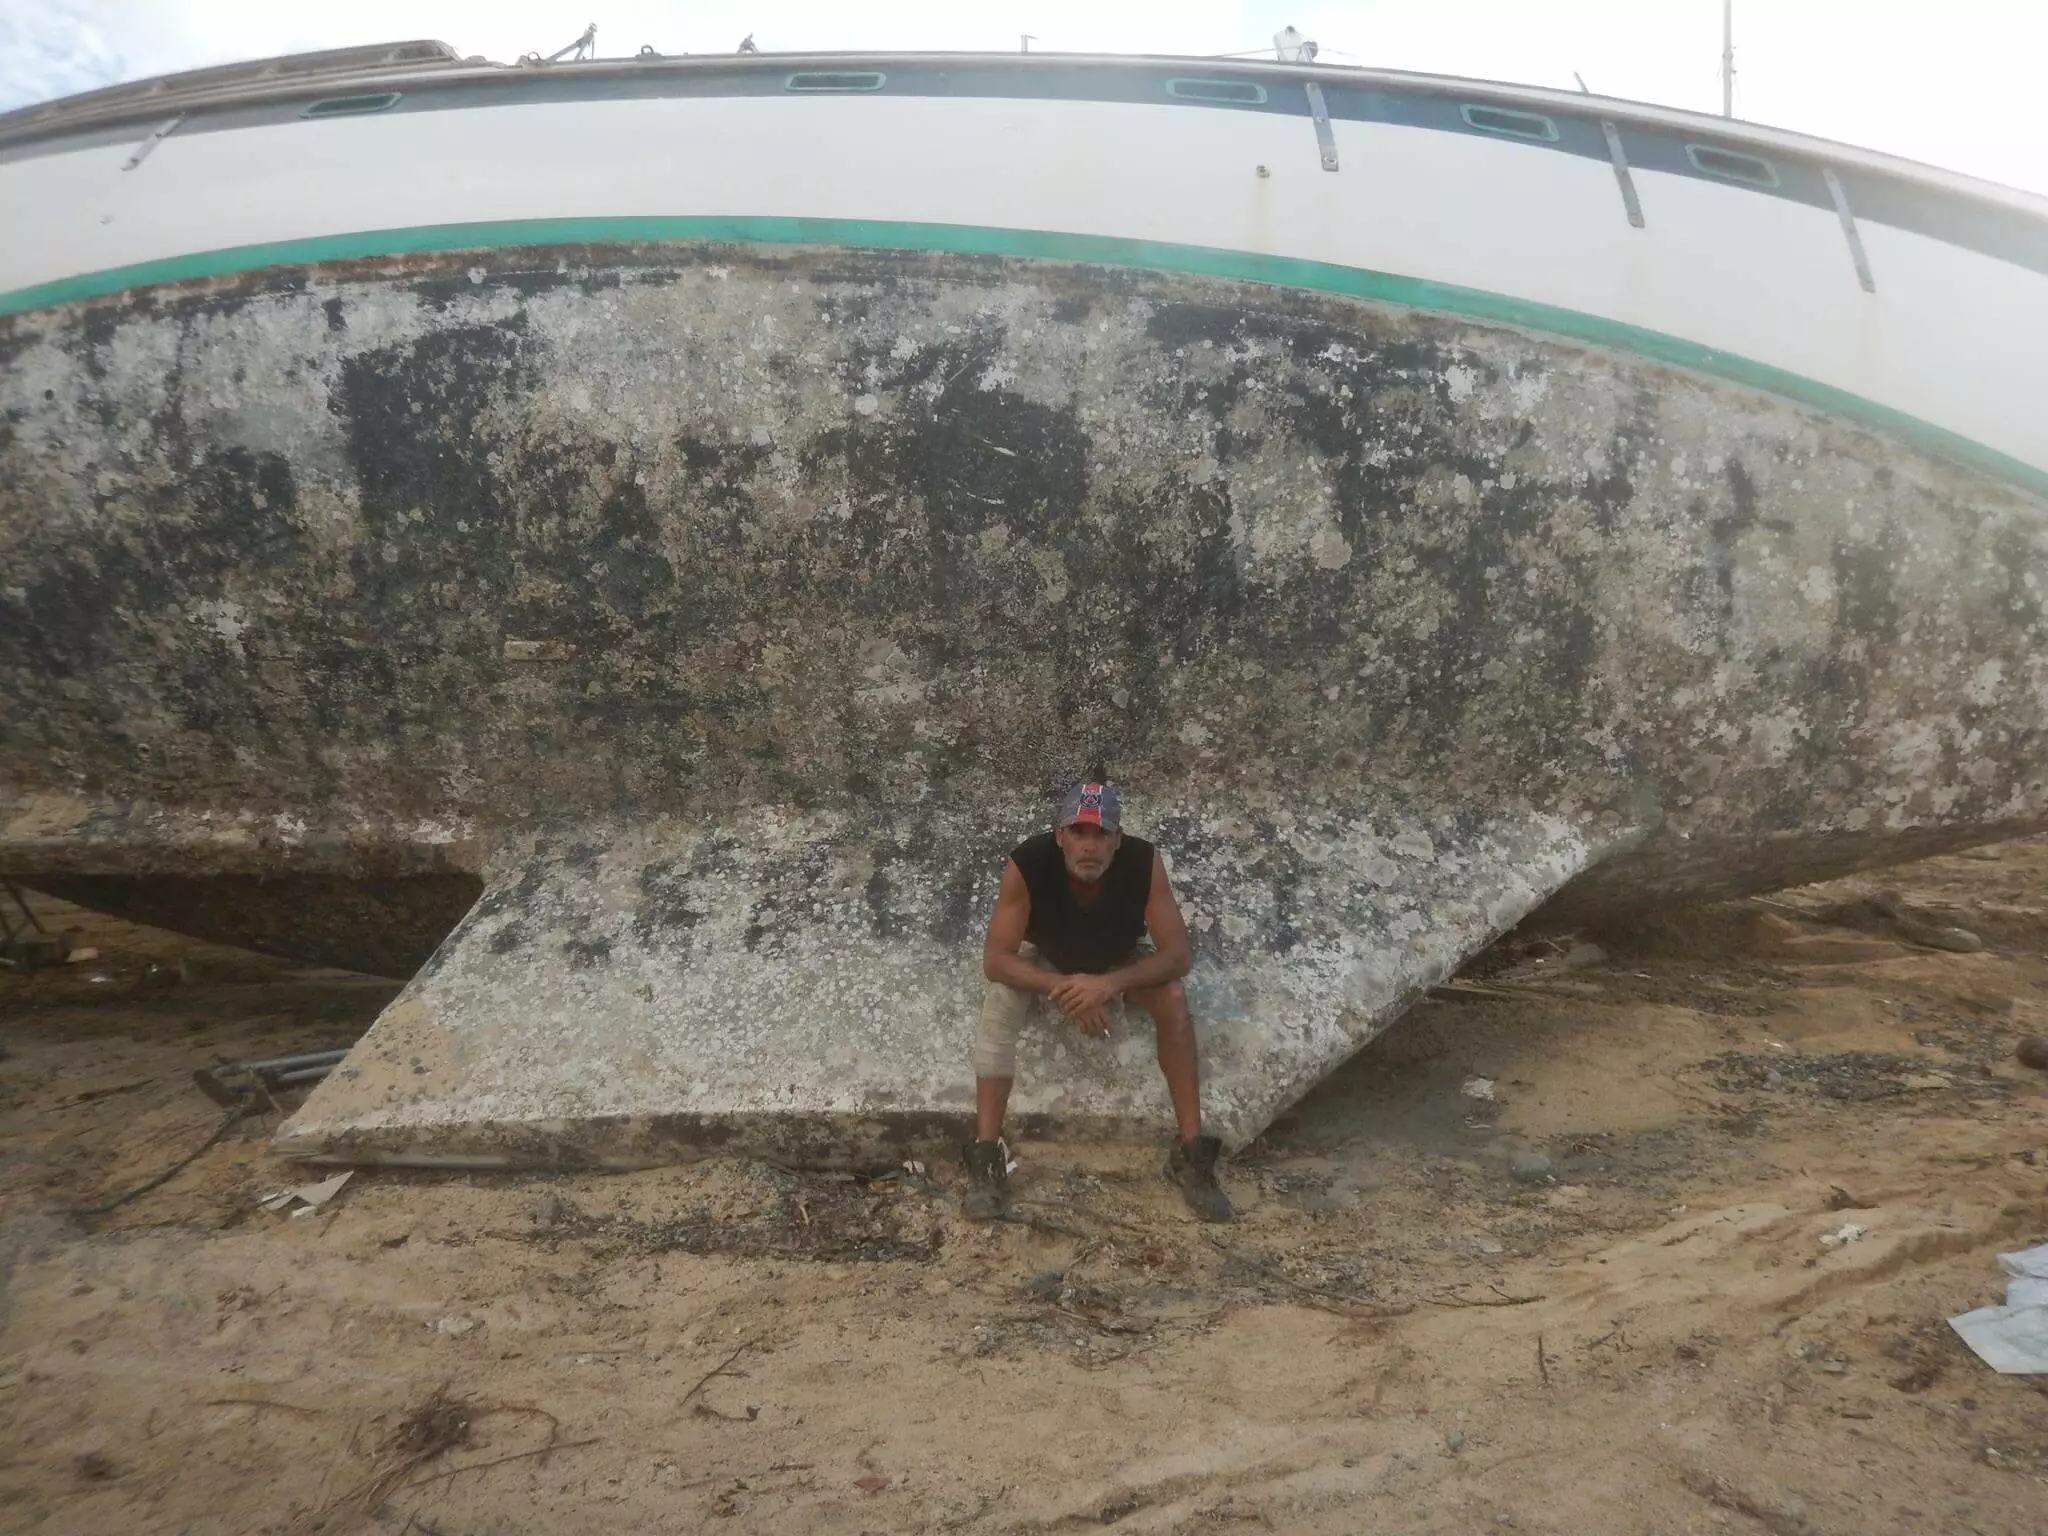 hurricane damaged catamarans